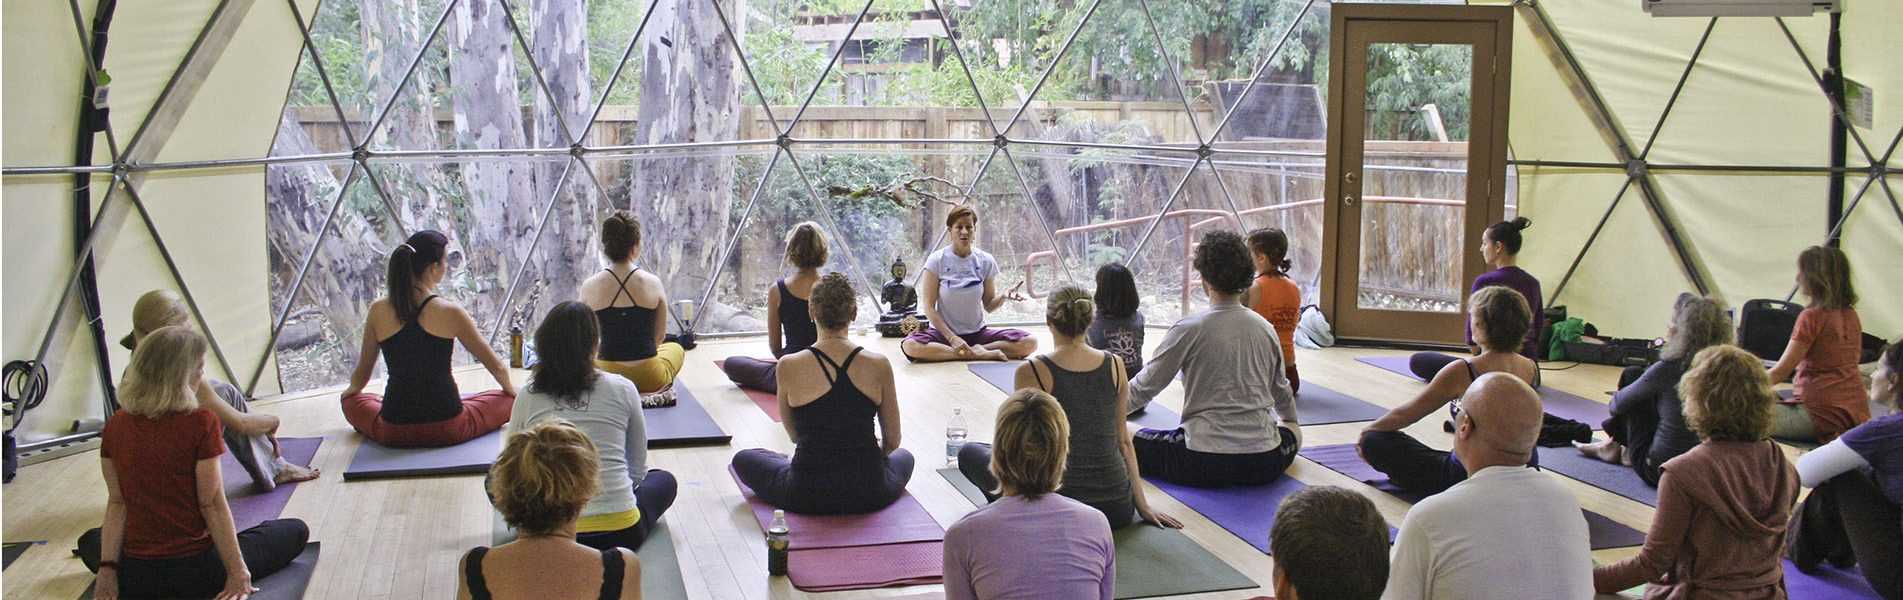 Help Save The Yoga Tent Studio